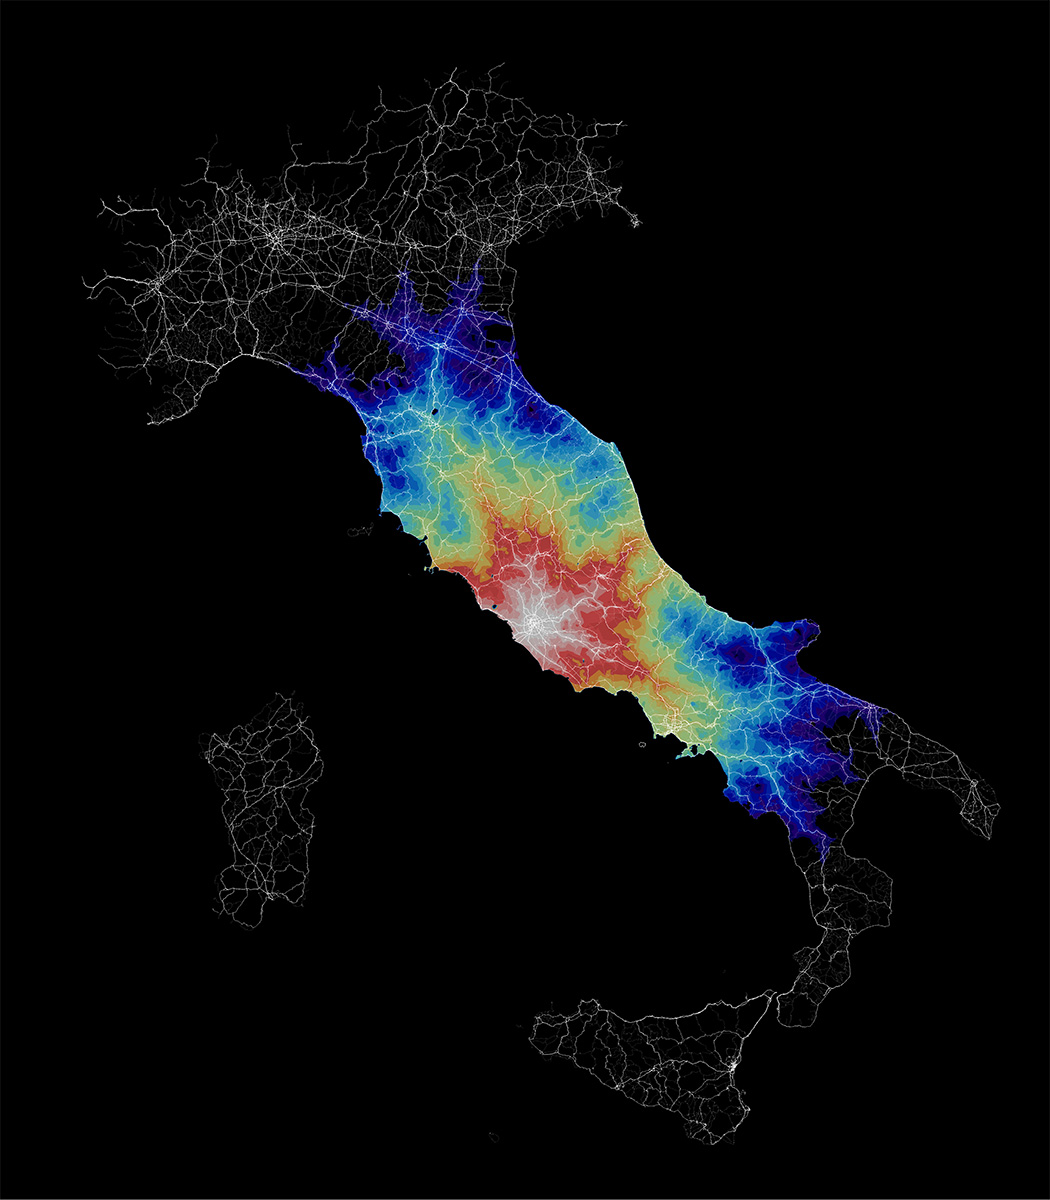 Roma Area: road network 2018-2050